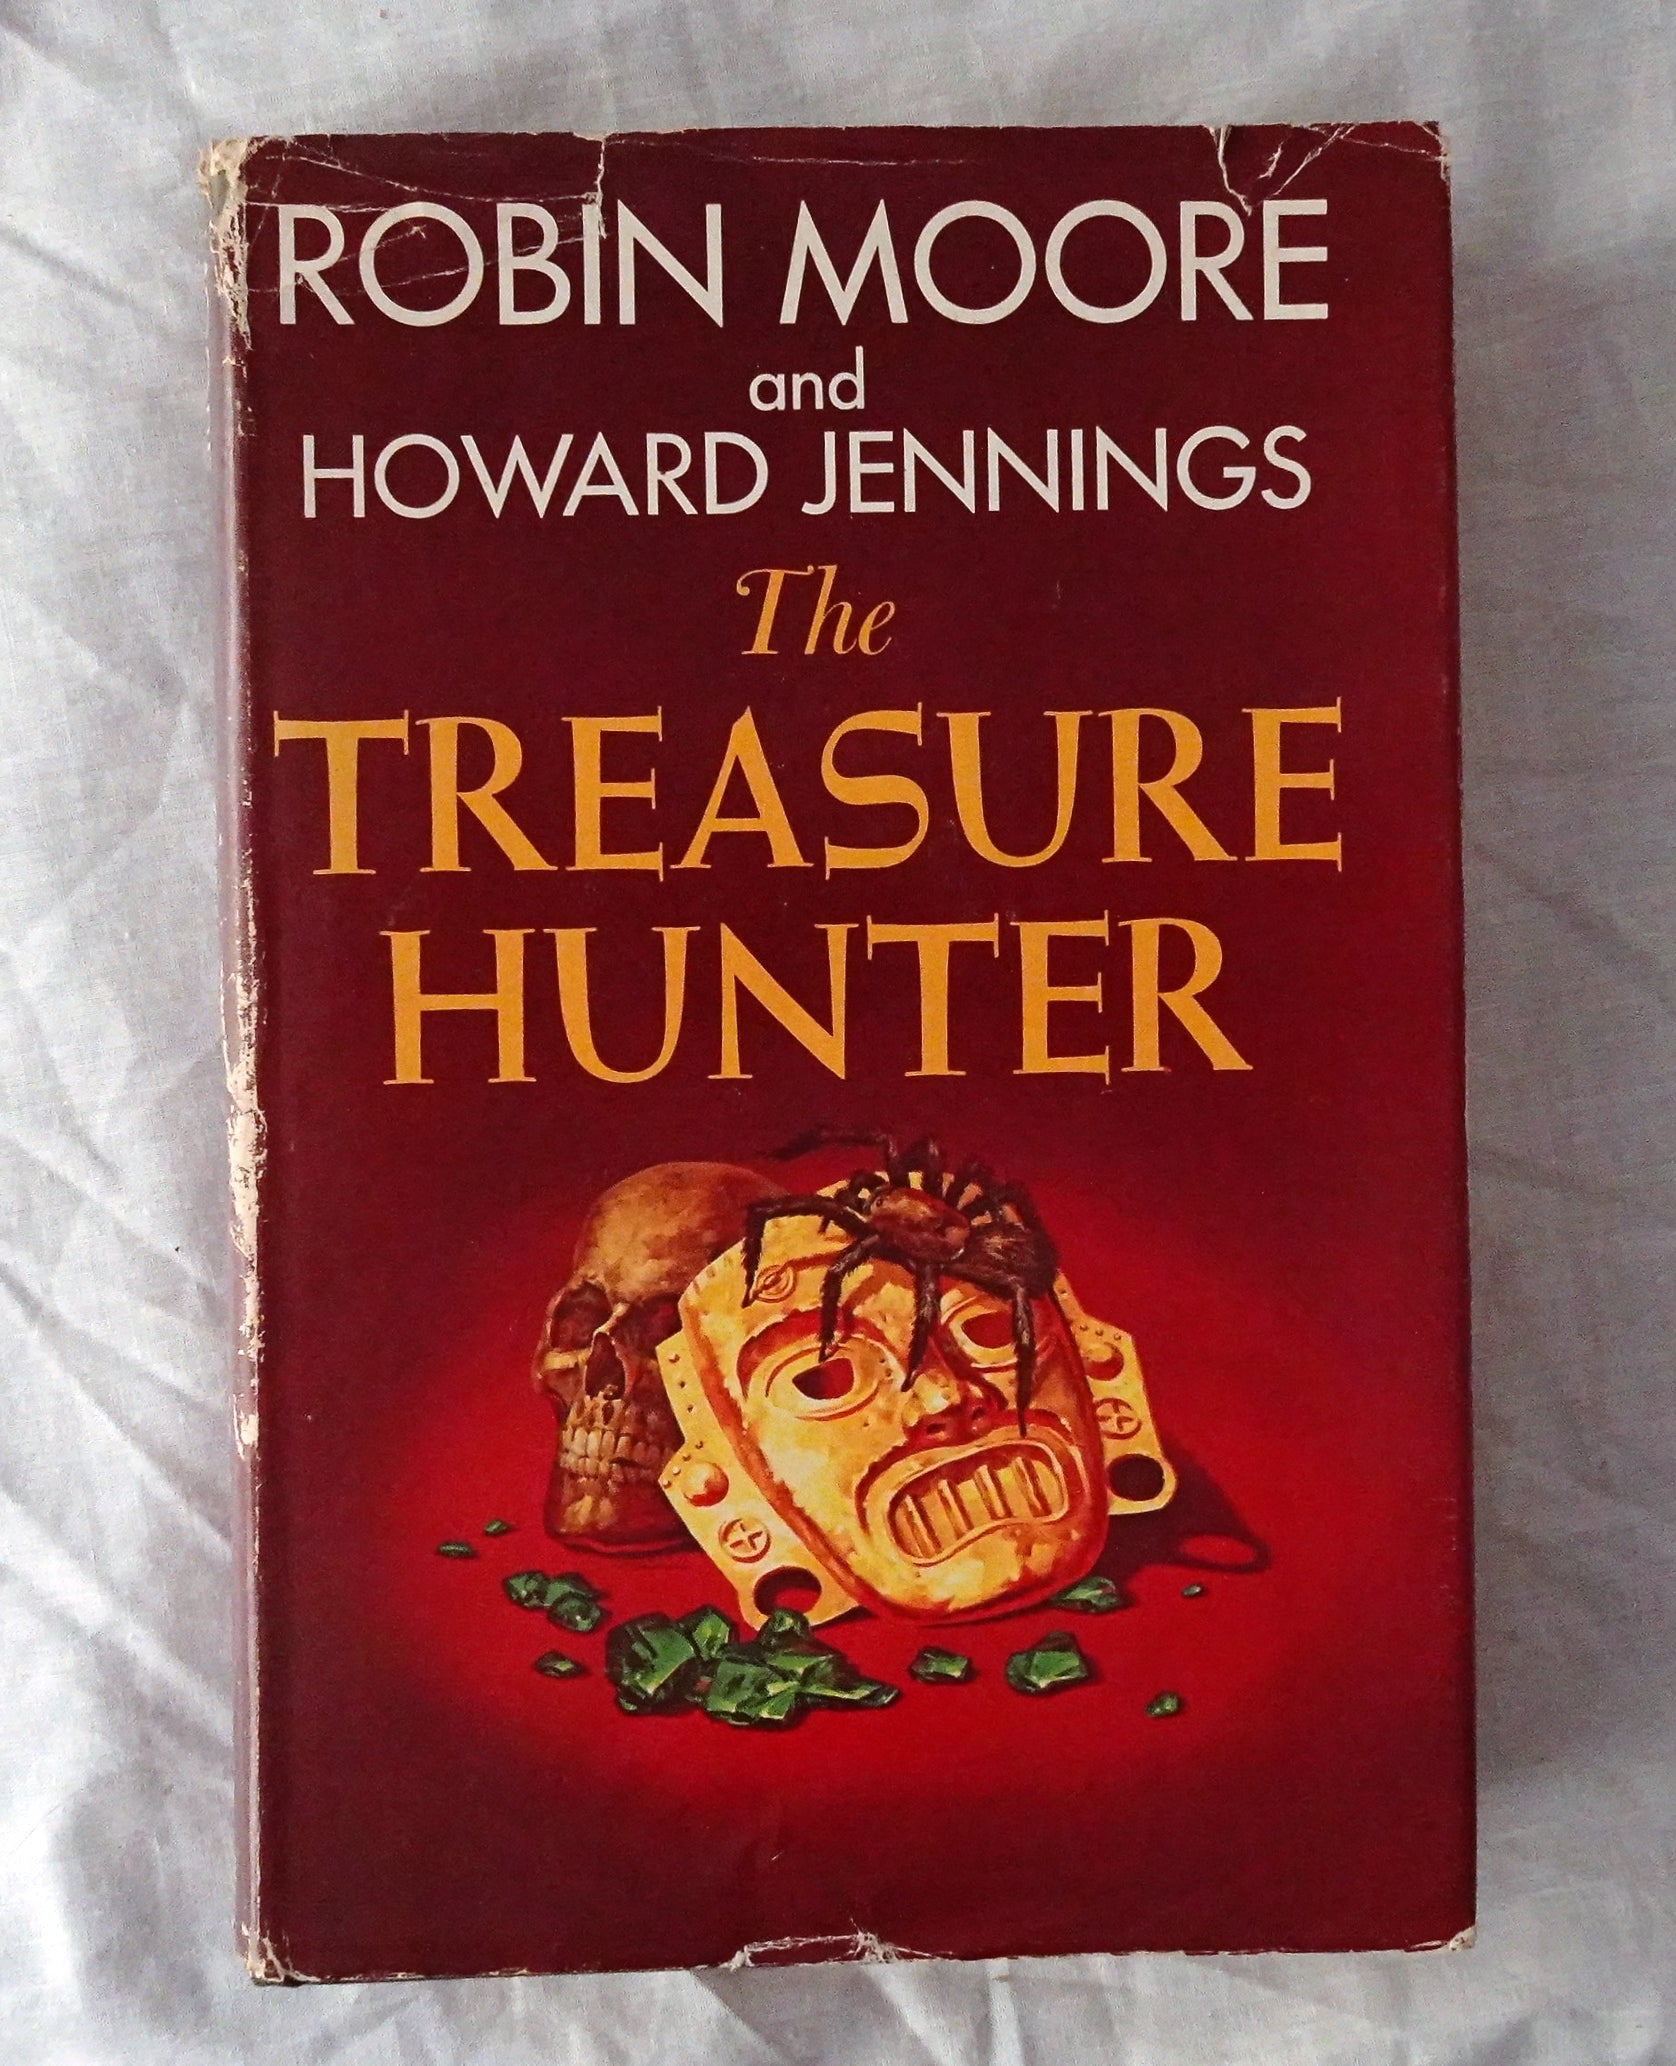 The Treasure Hunter  by Robin Moore and Howard Jennings